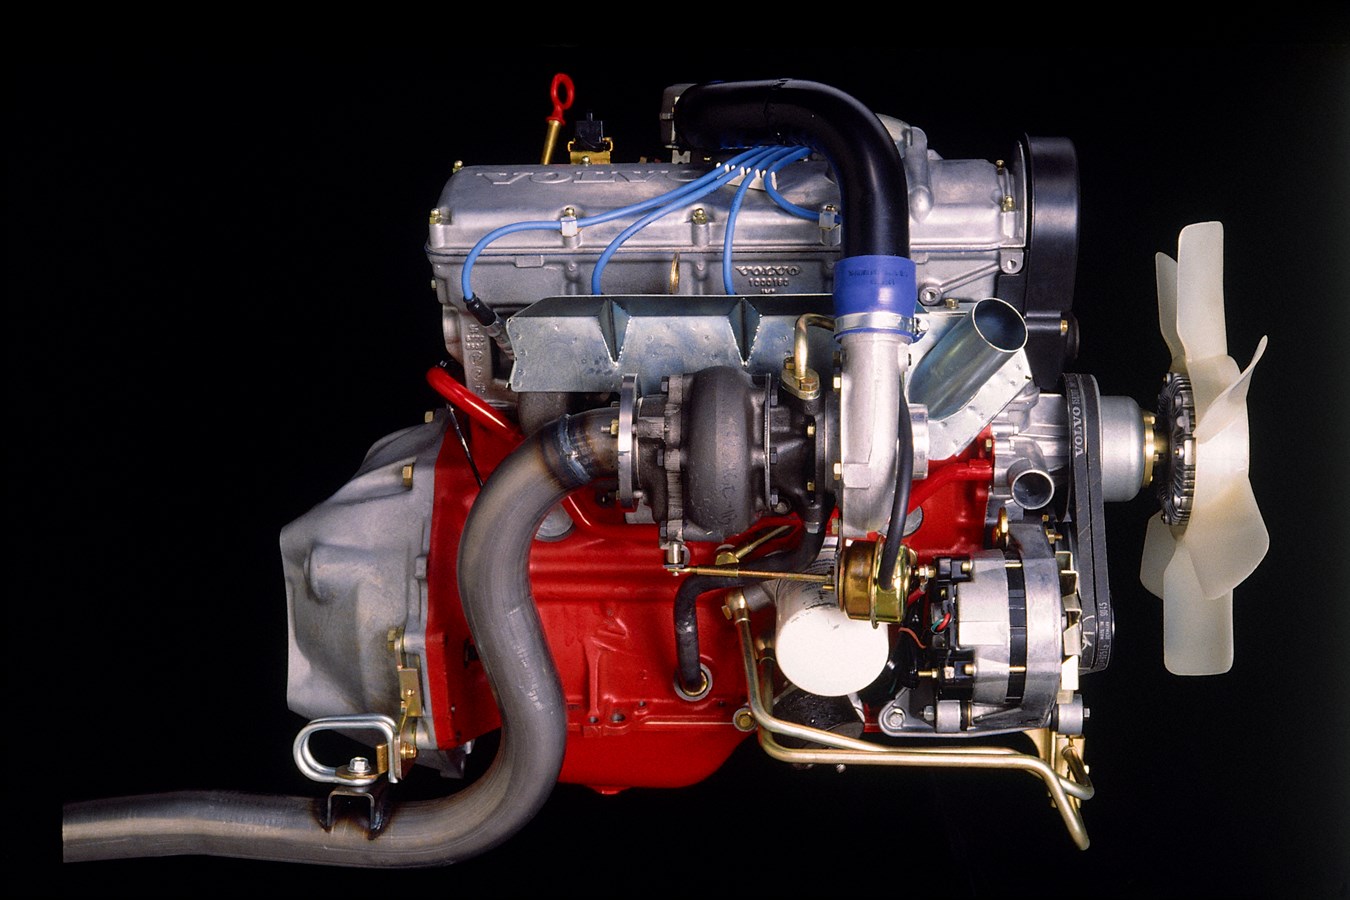 240, B21ET, 1980, Exhaust side with turbocharger unit